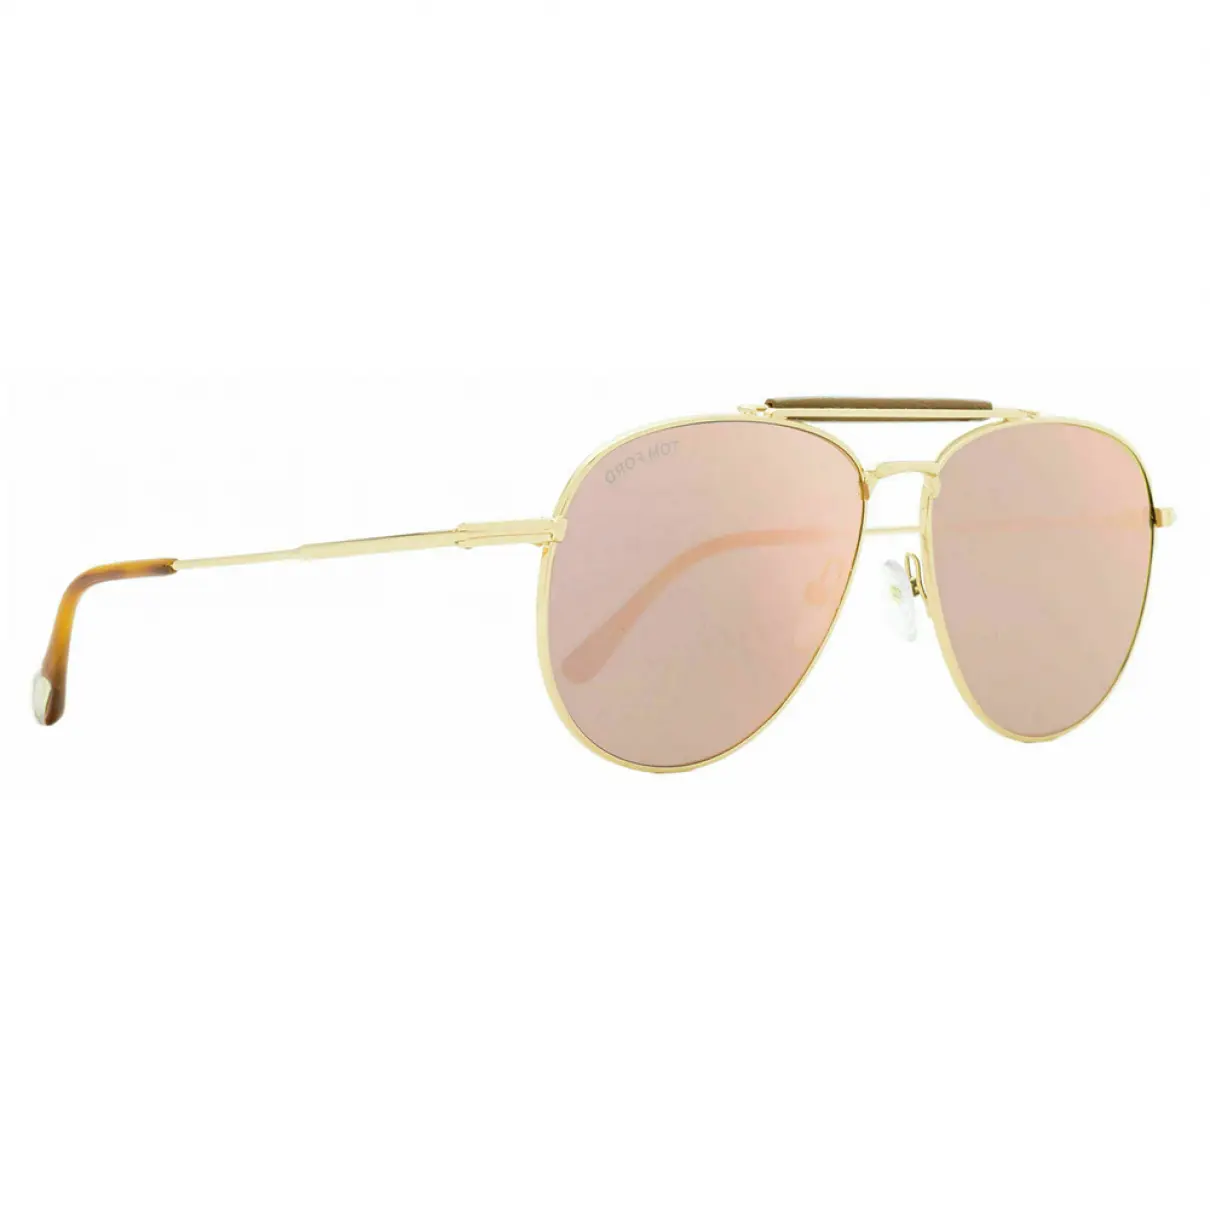 Luxury Tom Ford Sunglasses Women